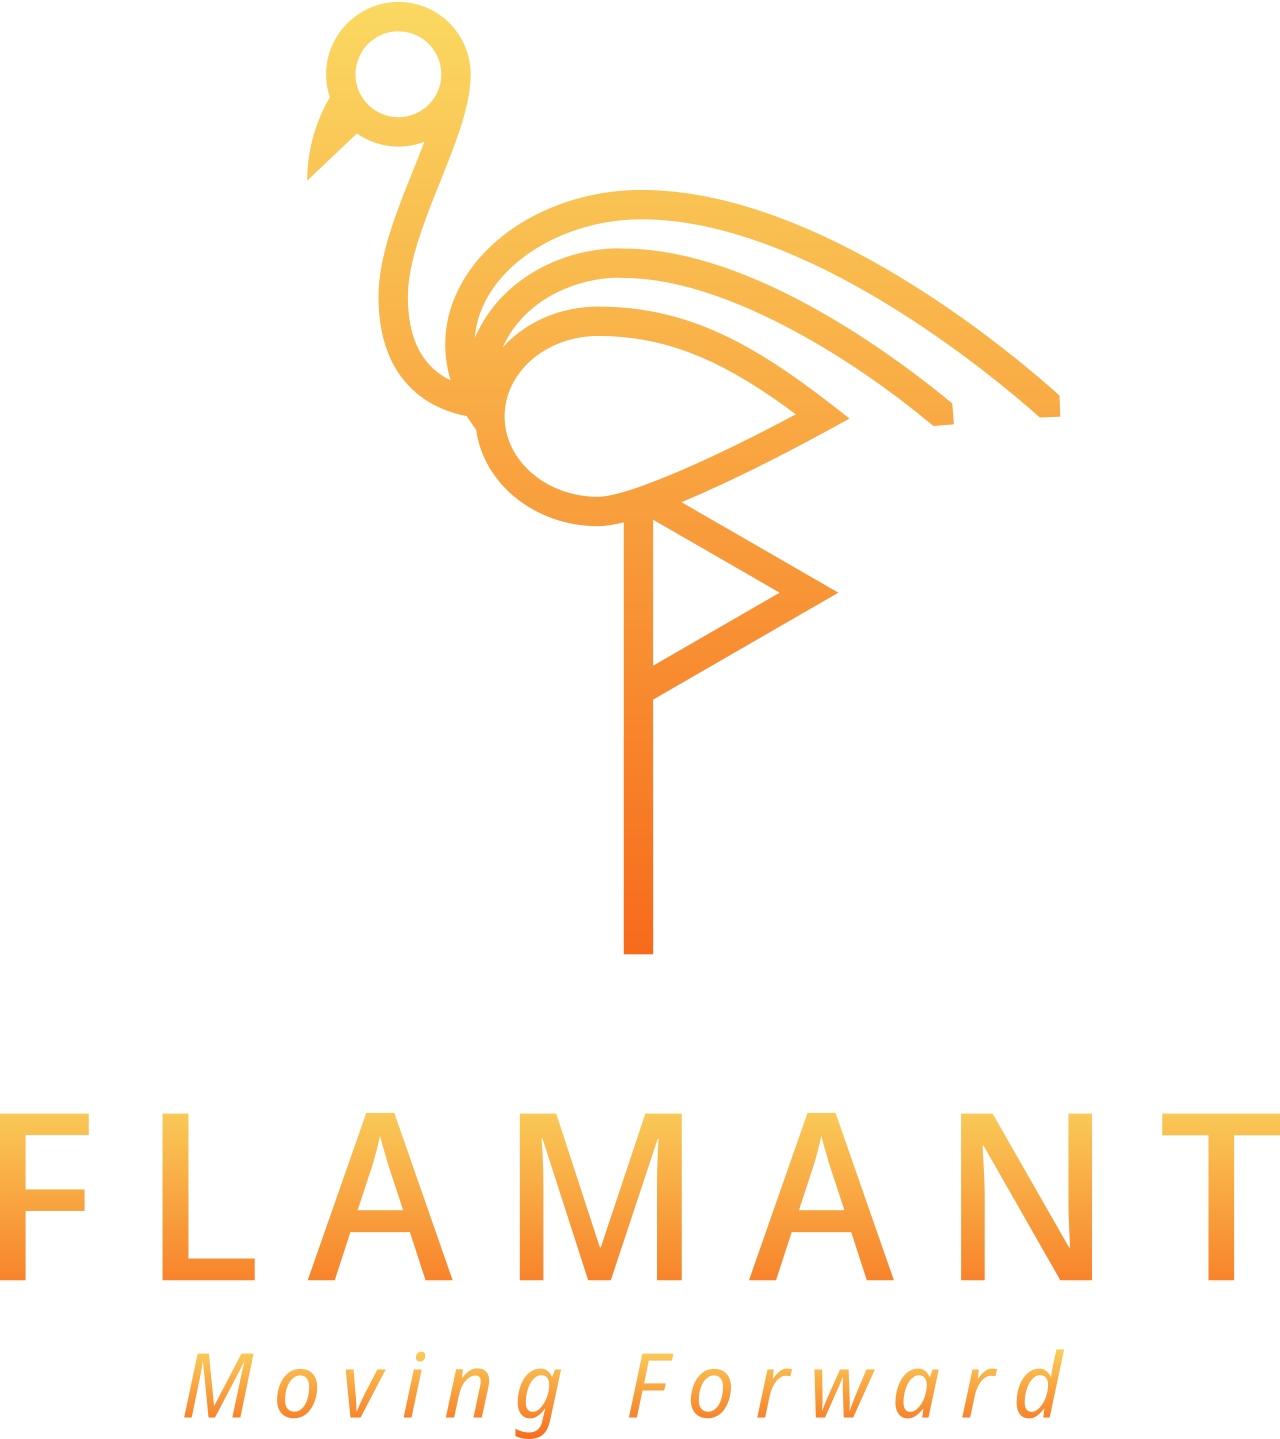 flamant 's logo